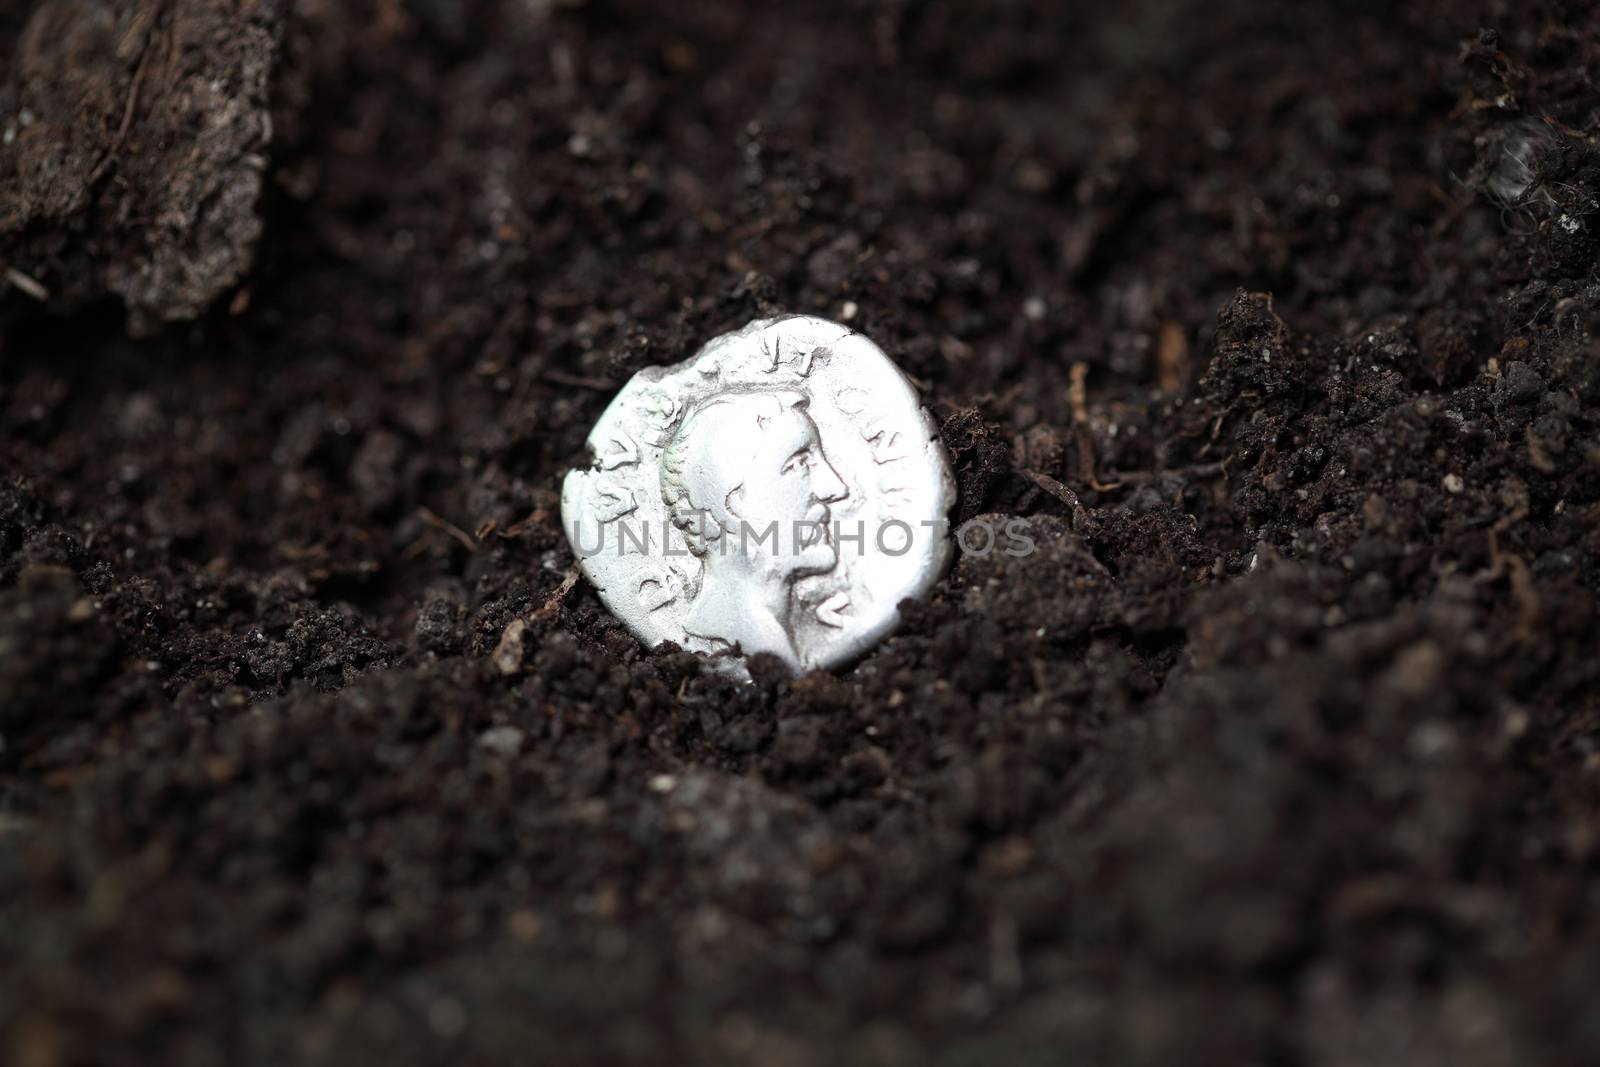 Silver denarius in the ground